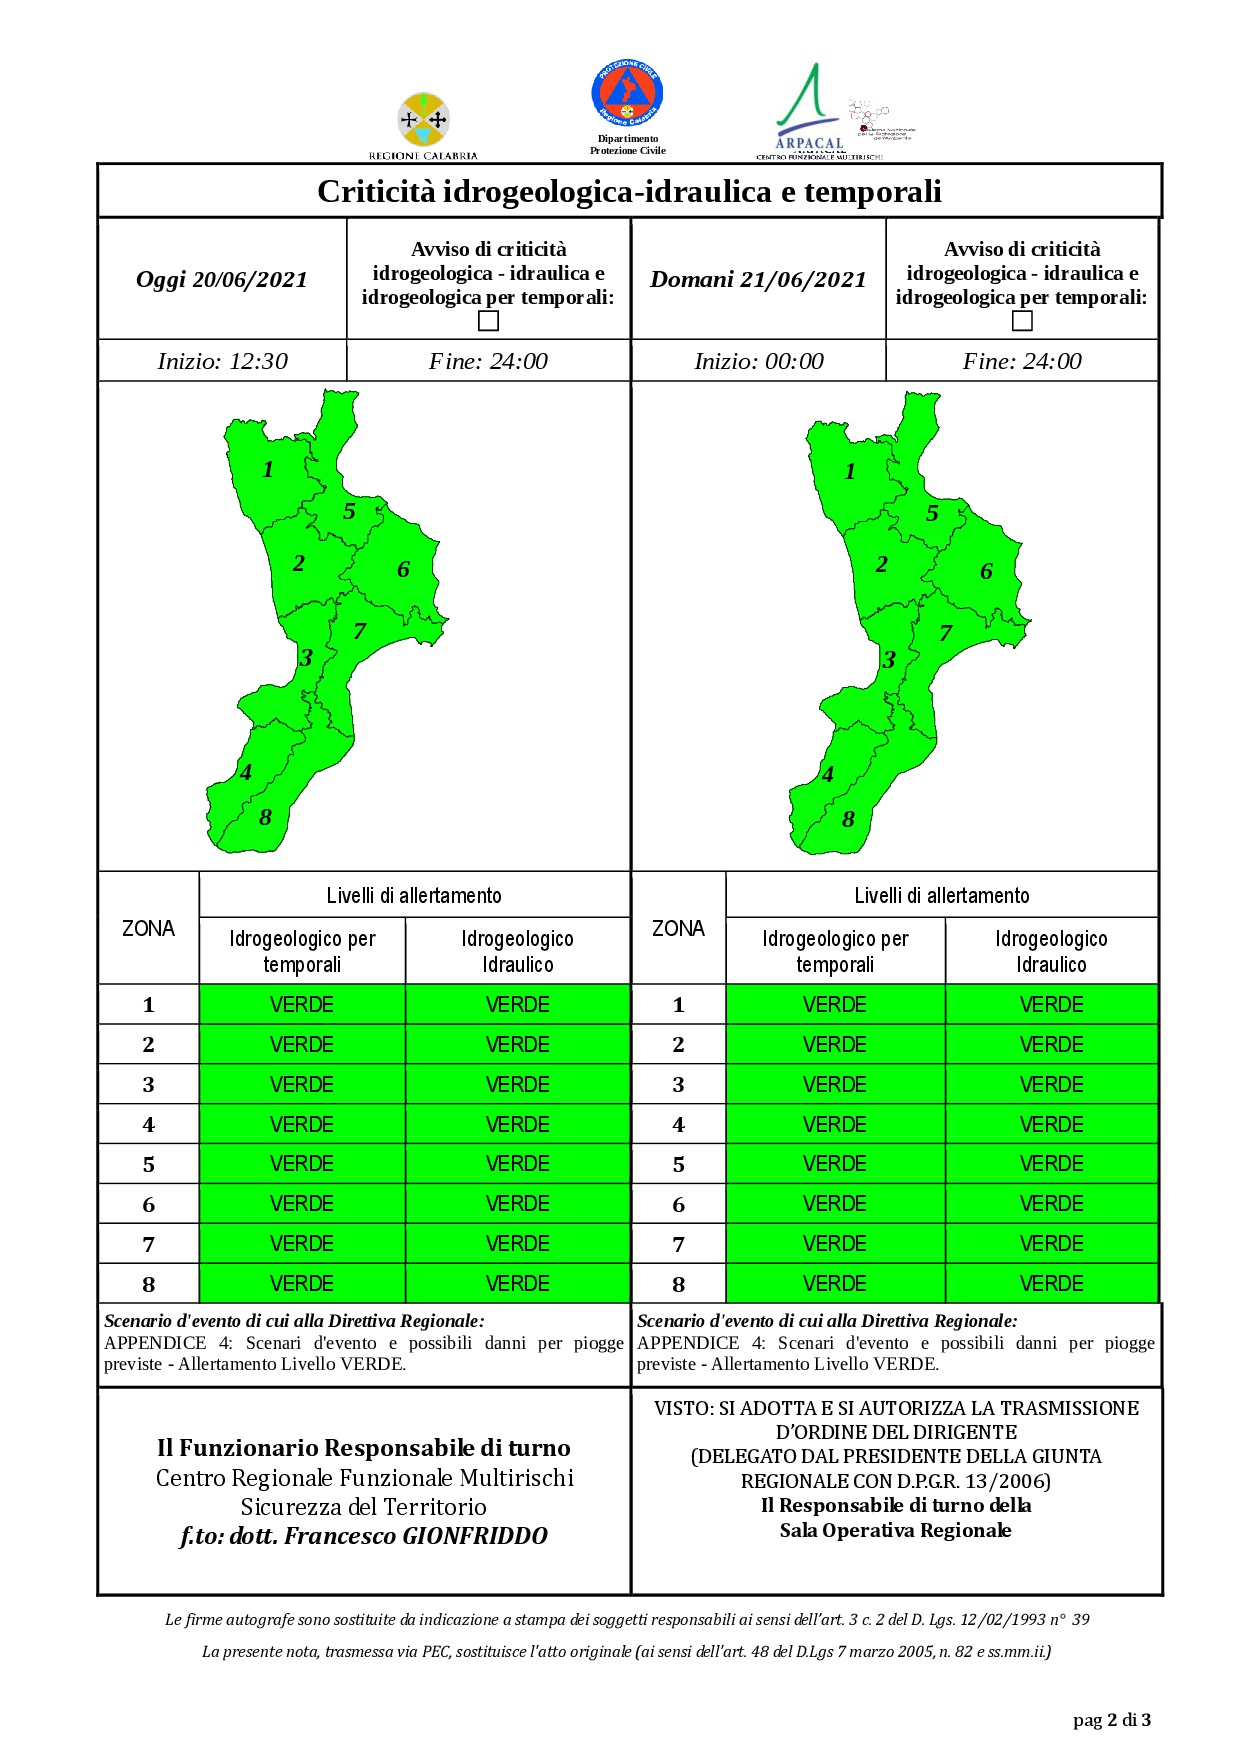 Criticità idrogeologica-idraulica e temporali in Calabria 20-06-2021